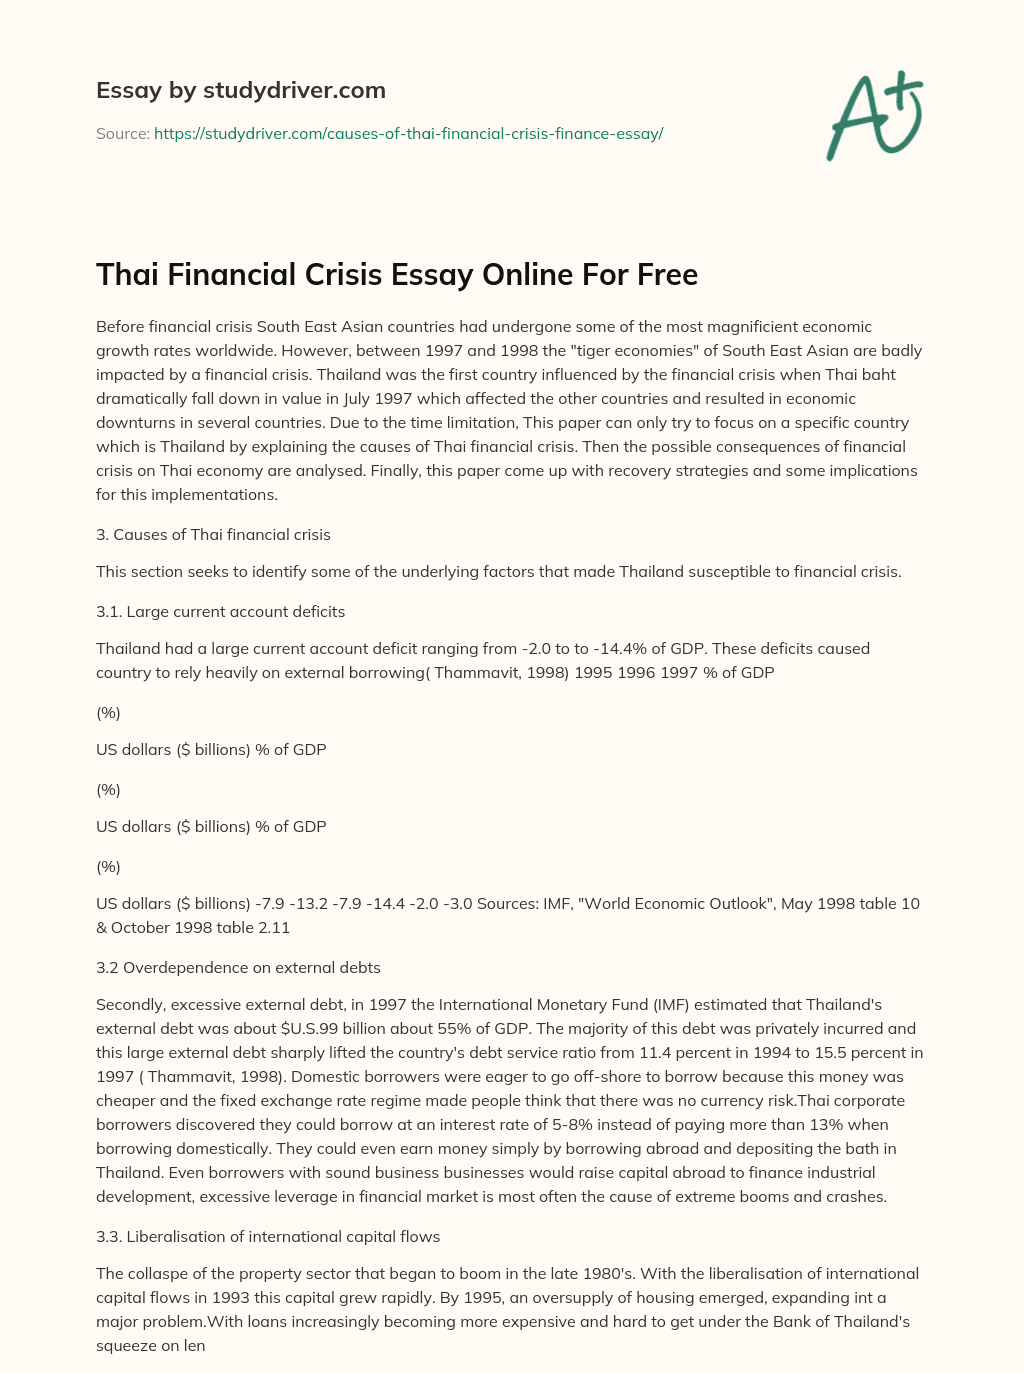 Thai Financial Crisis Essay Online for Free essay